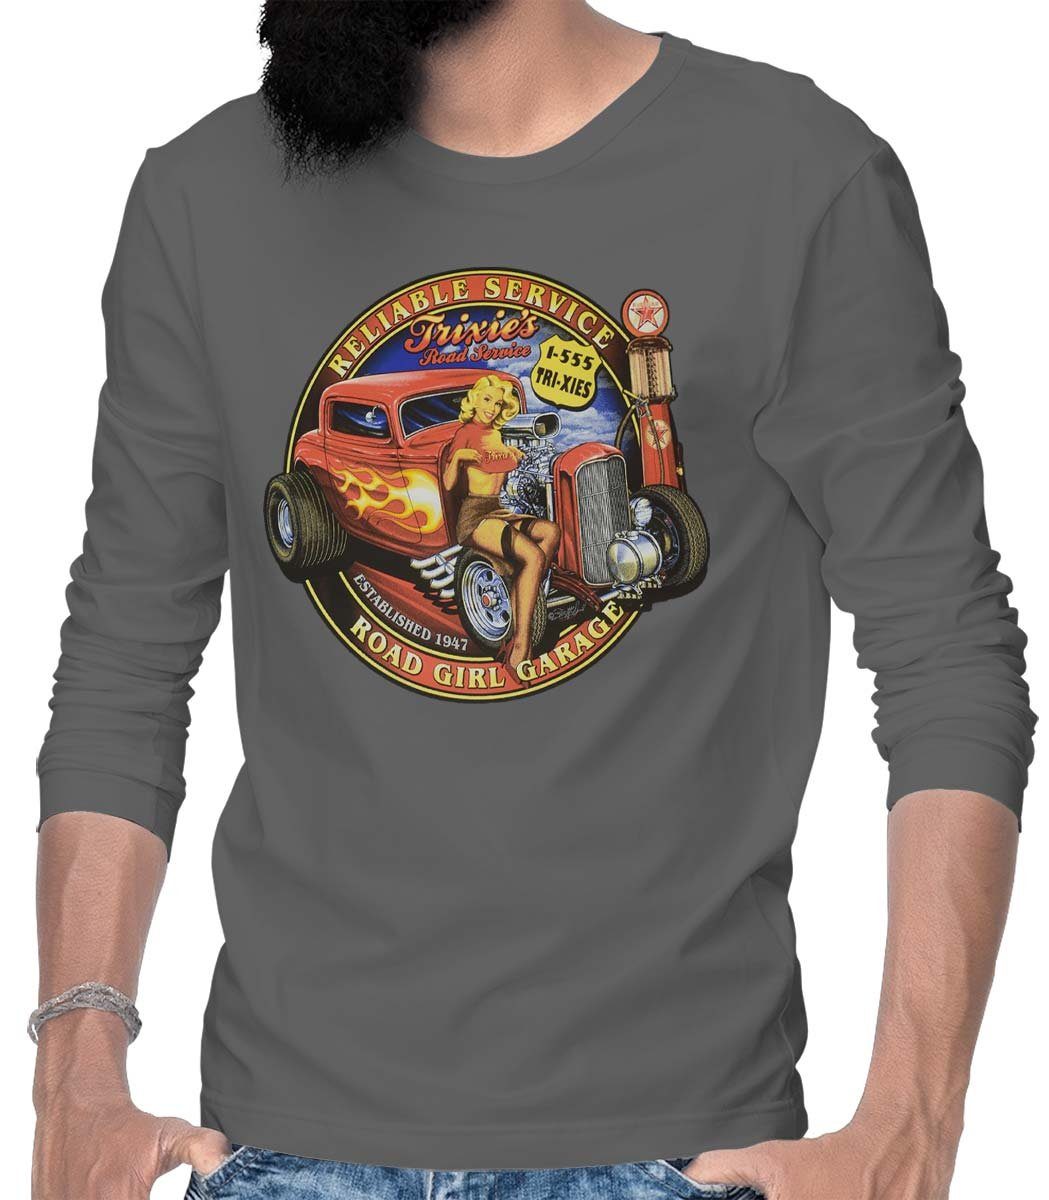 Rebel On Wheels Longsleeve mit Longsleeve Herren US-Car Tee T-Shirt Grau Hotrod Trixies Roadservice / Motiv Langarm